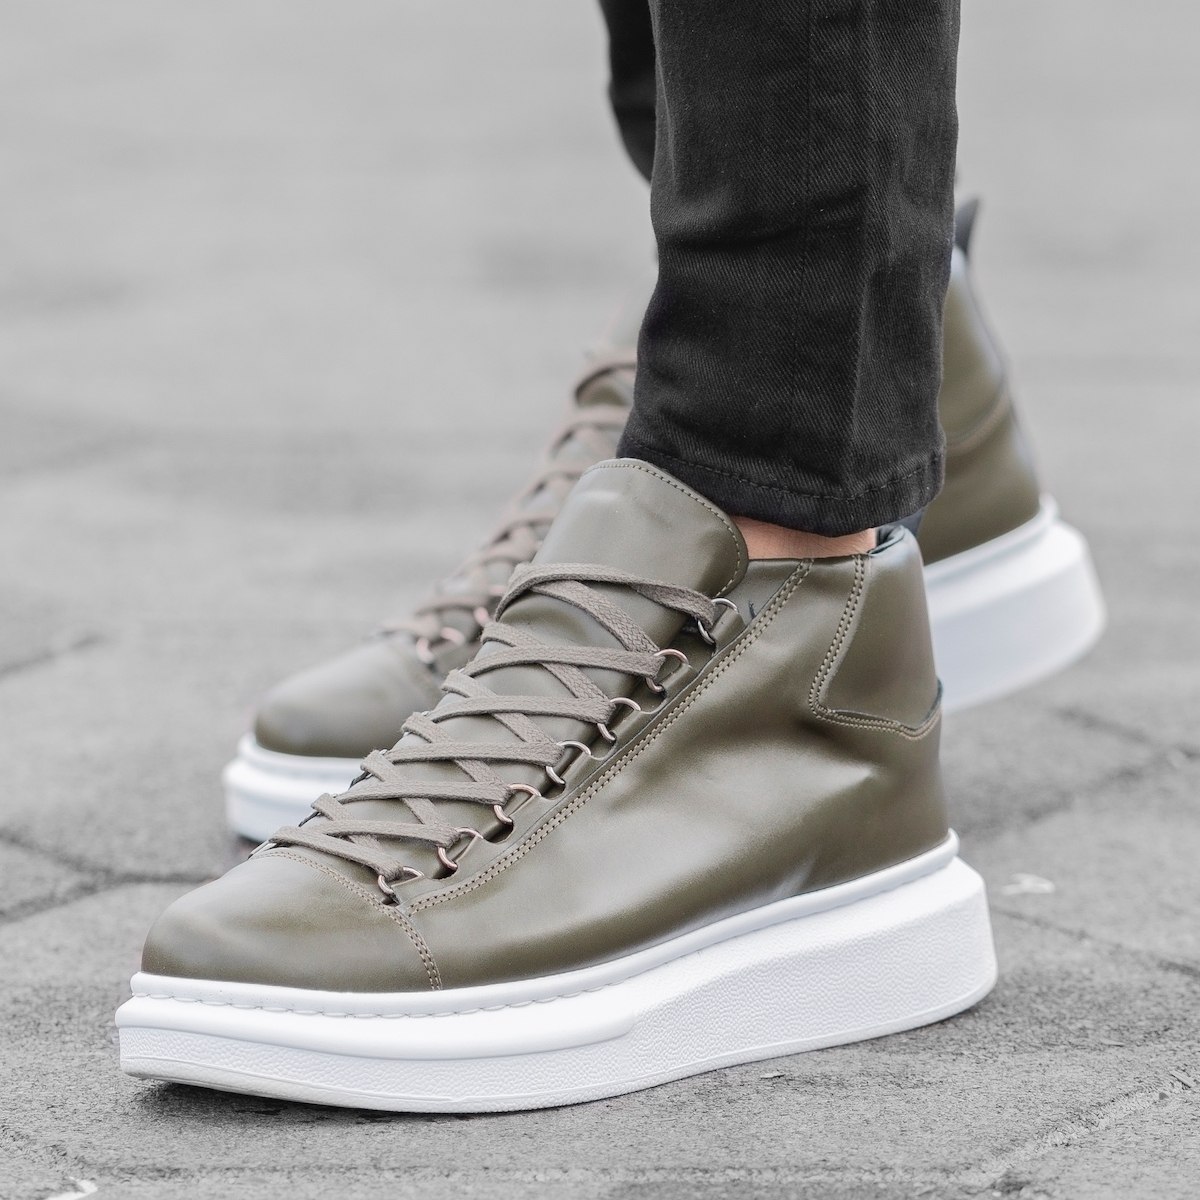 Herren High Top Sneakers Schuhe in khaki | Martin Valen